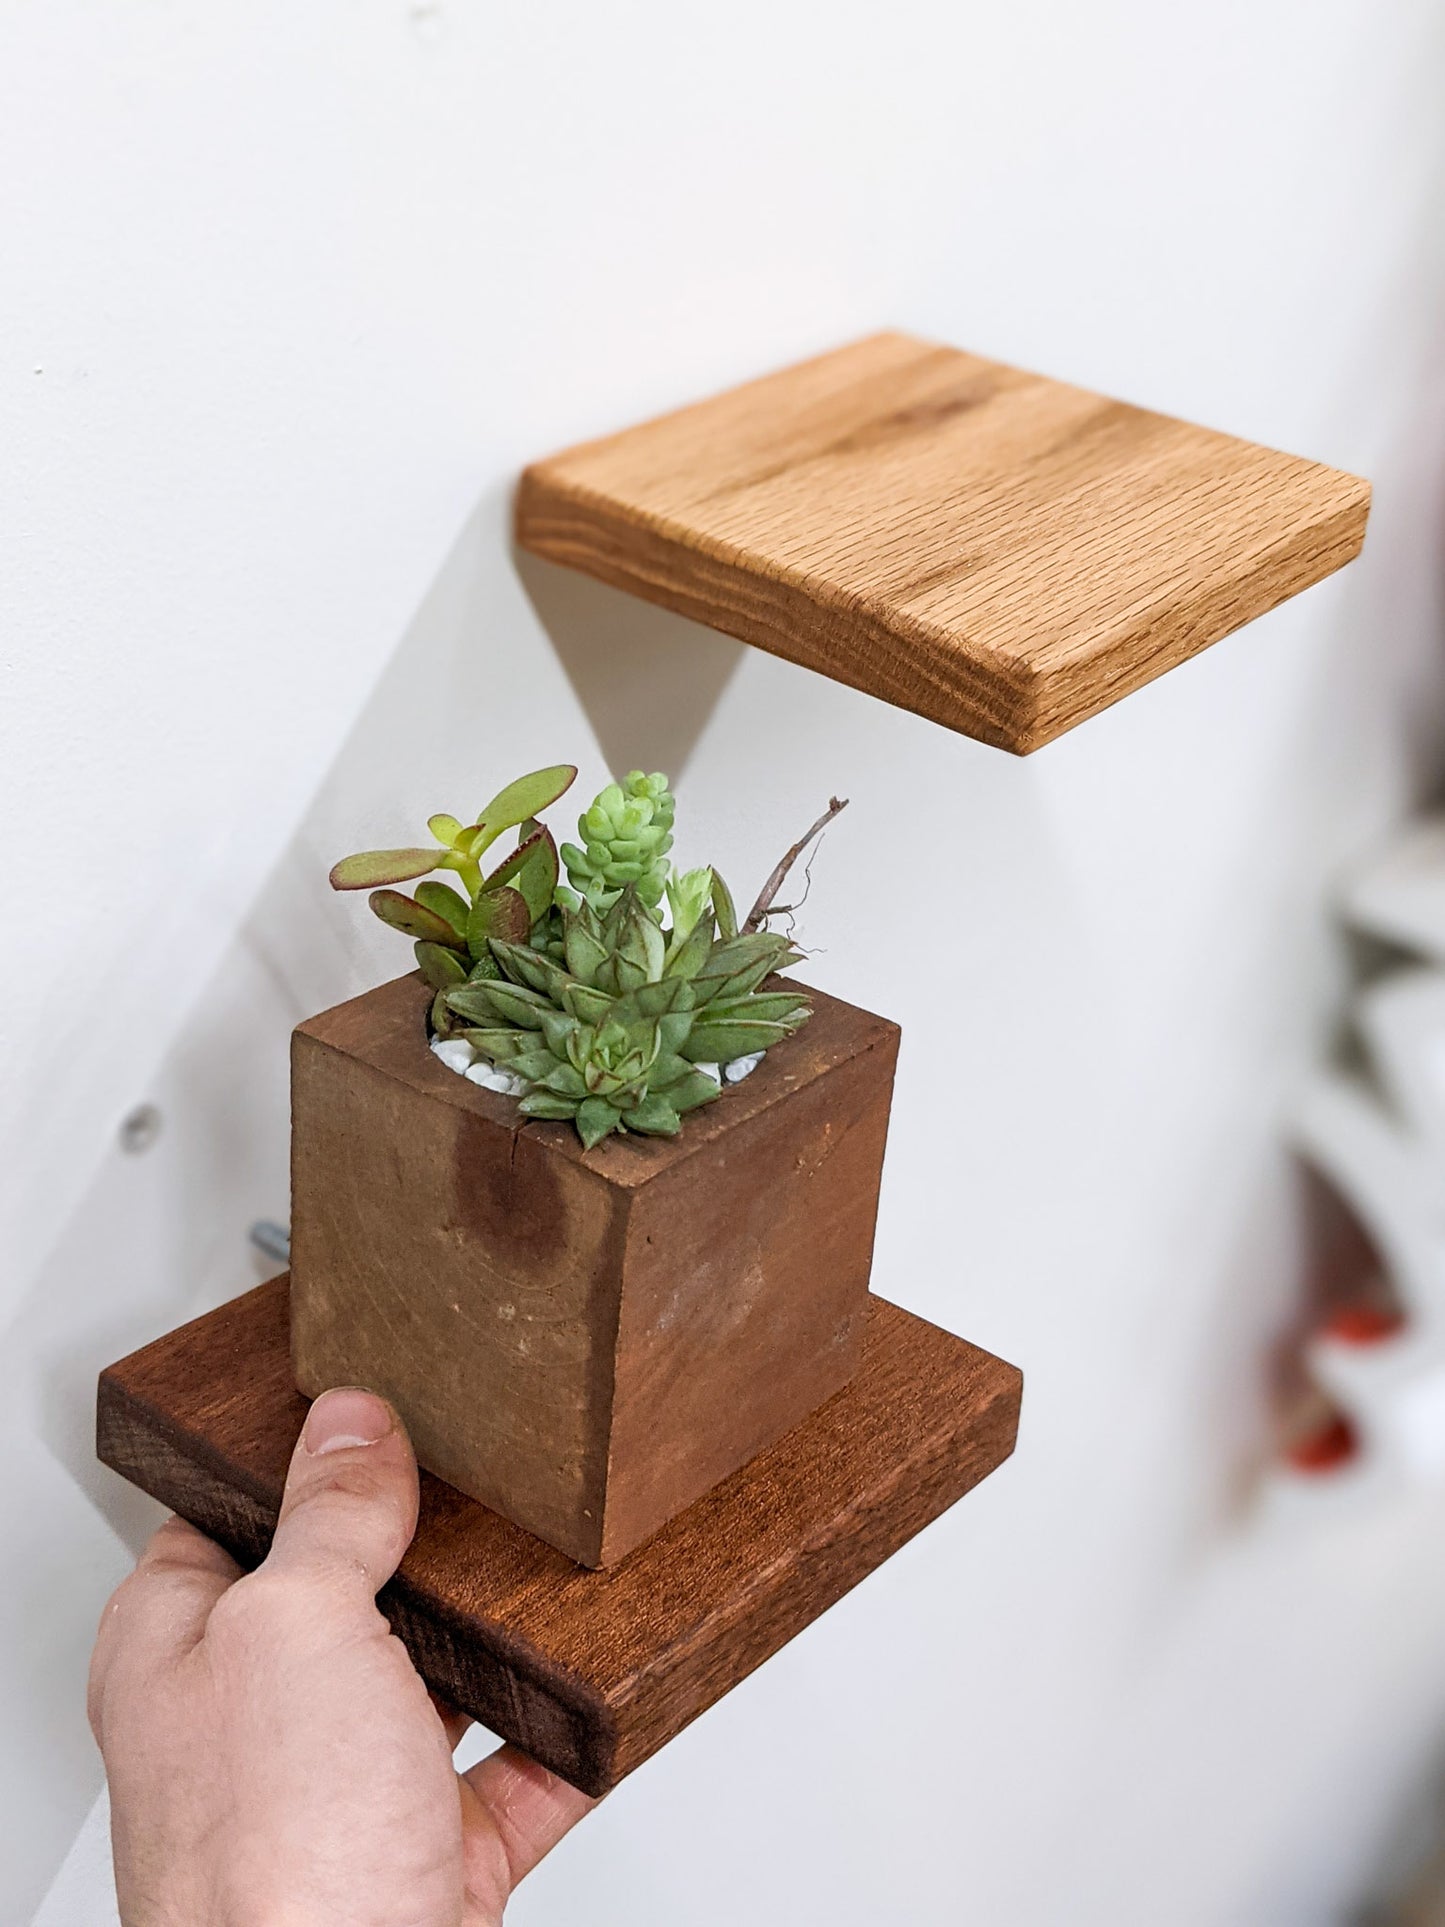 Mini Plant Wall Holder Tiny Shelf for Wall, Small Floating Shelves